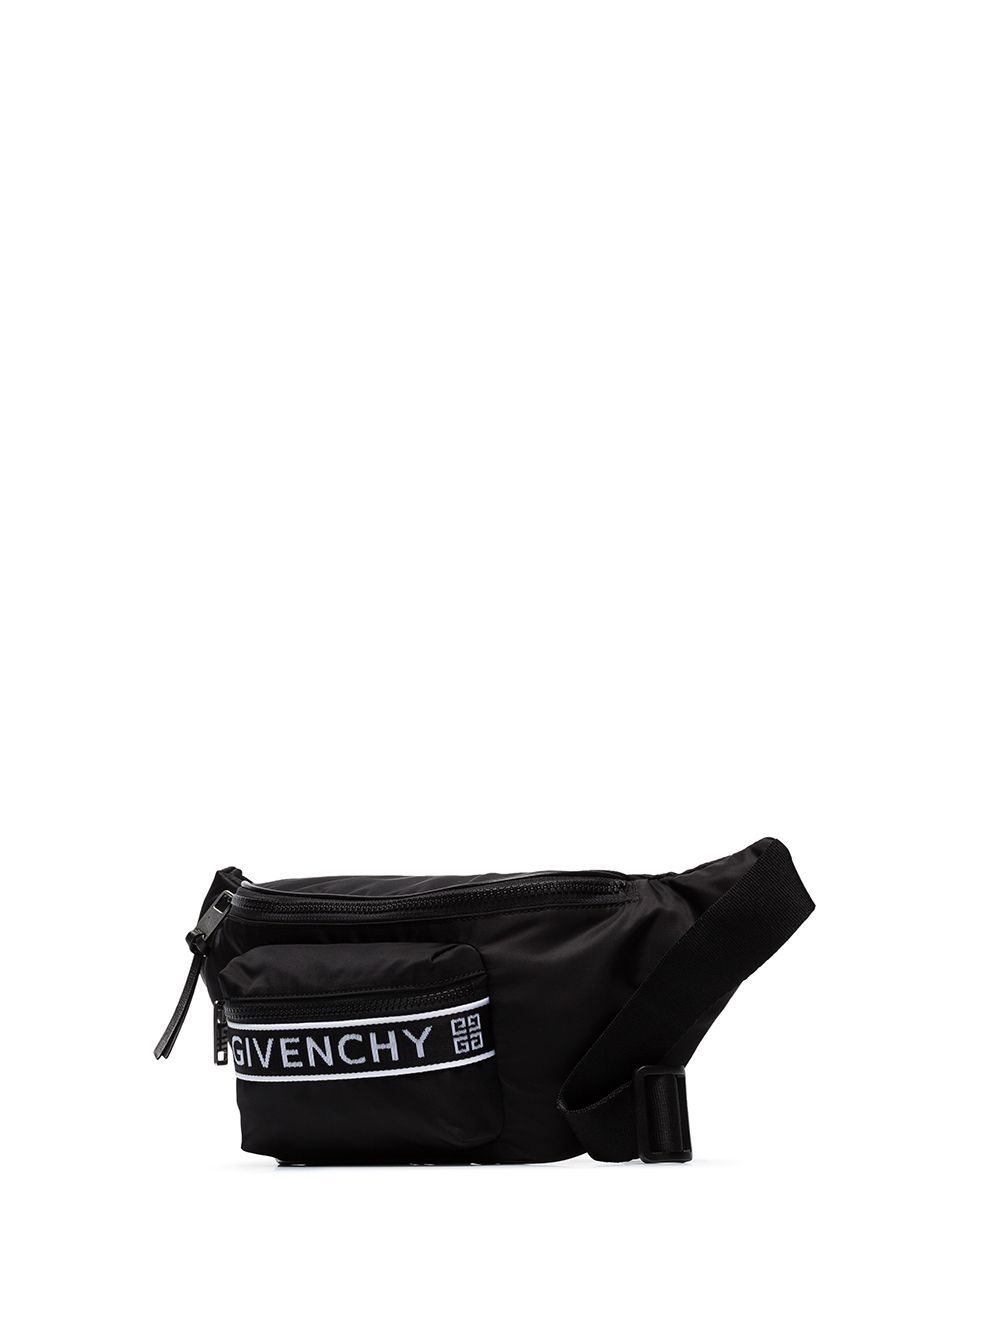 фото Givenchy поясная сумка с логотипом